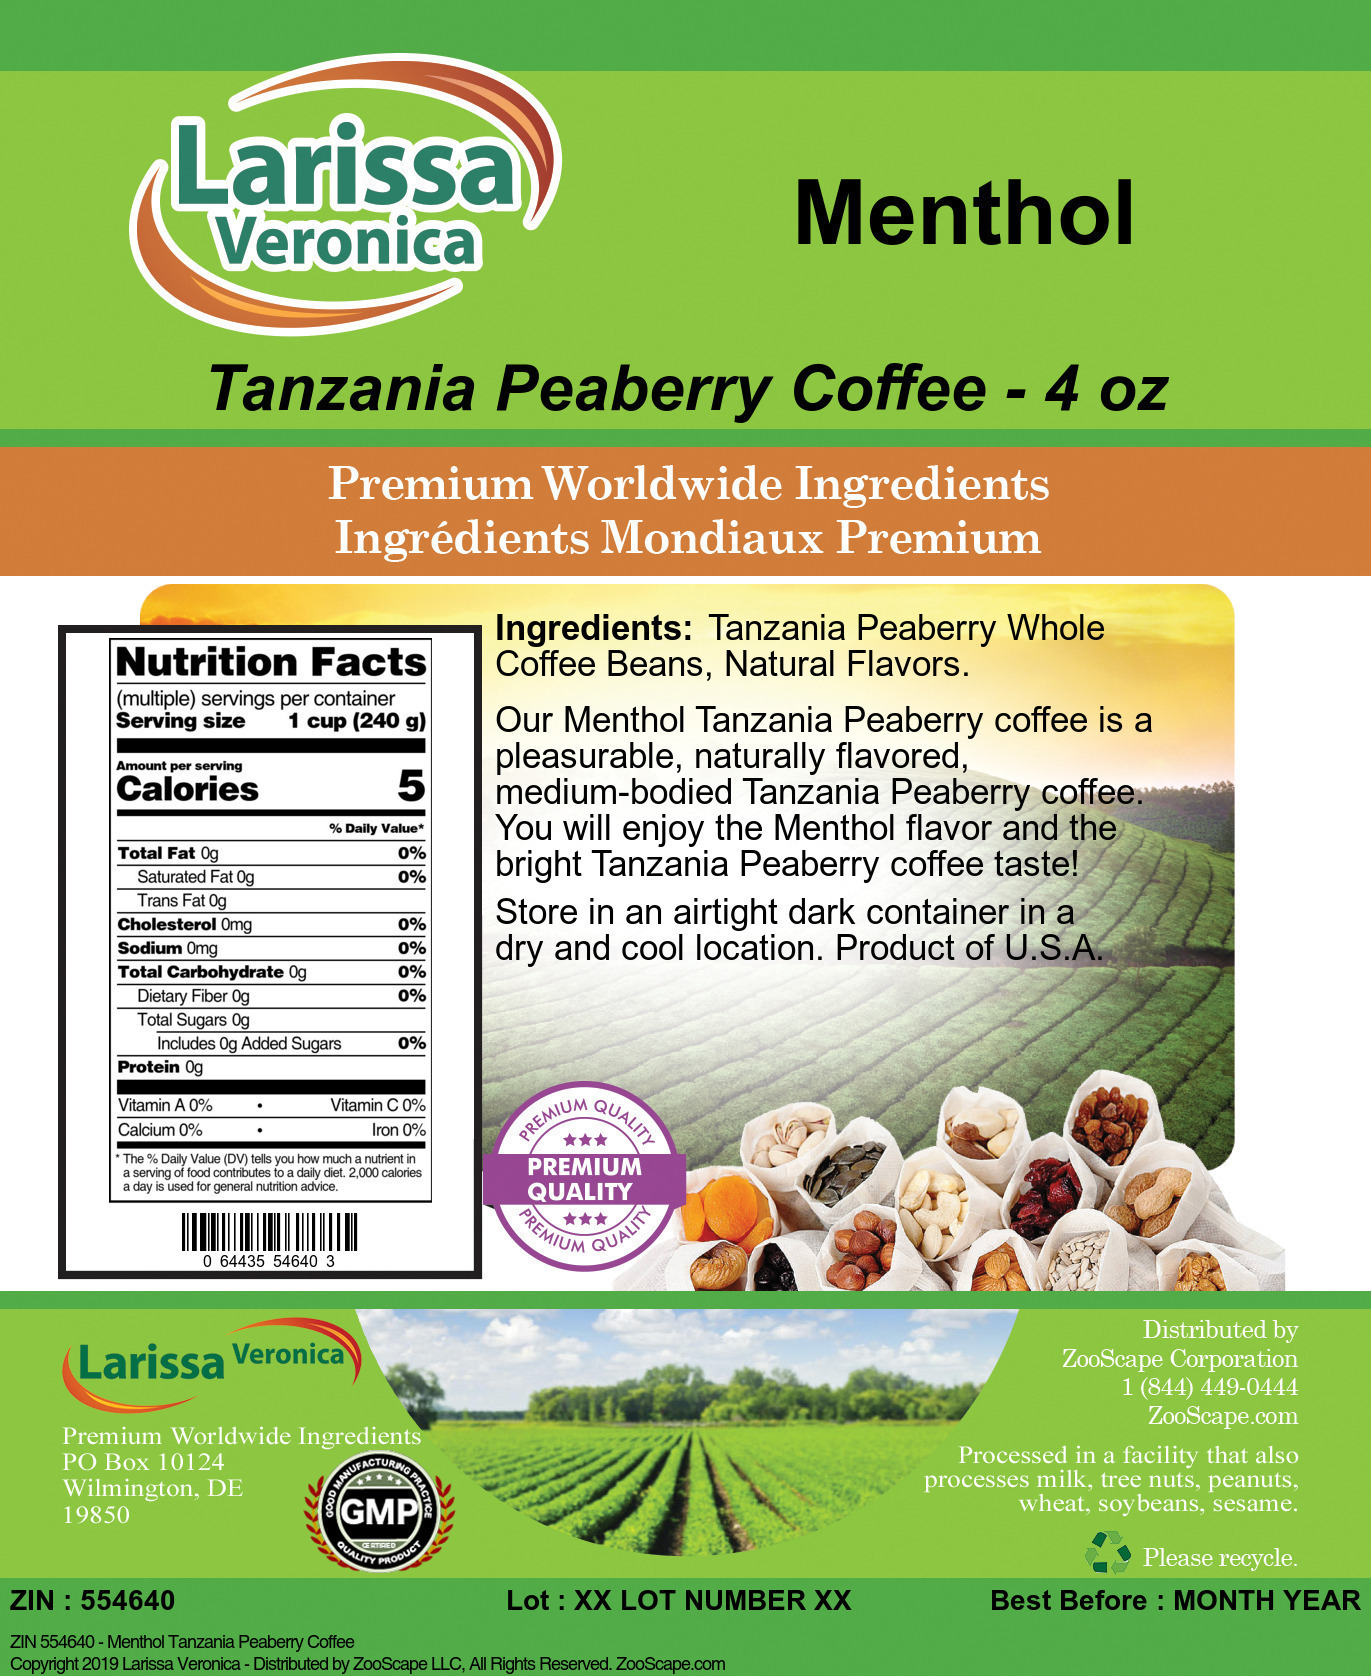 Menthol Tanzania Peaberry Coffee - Label